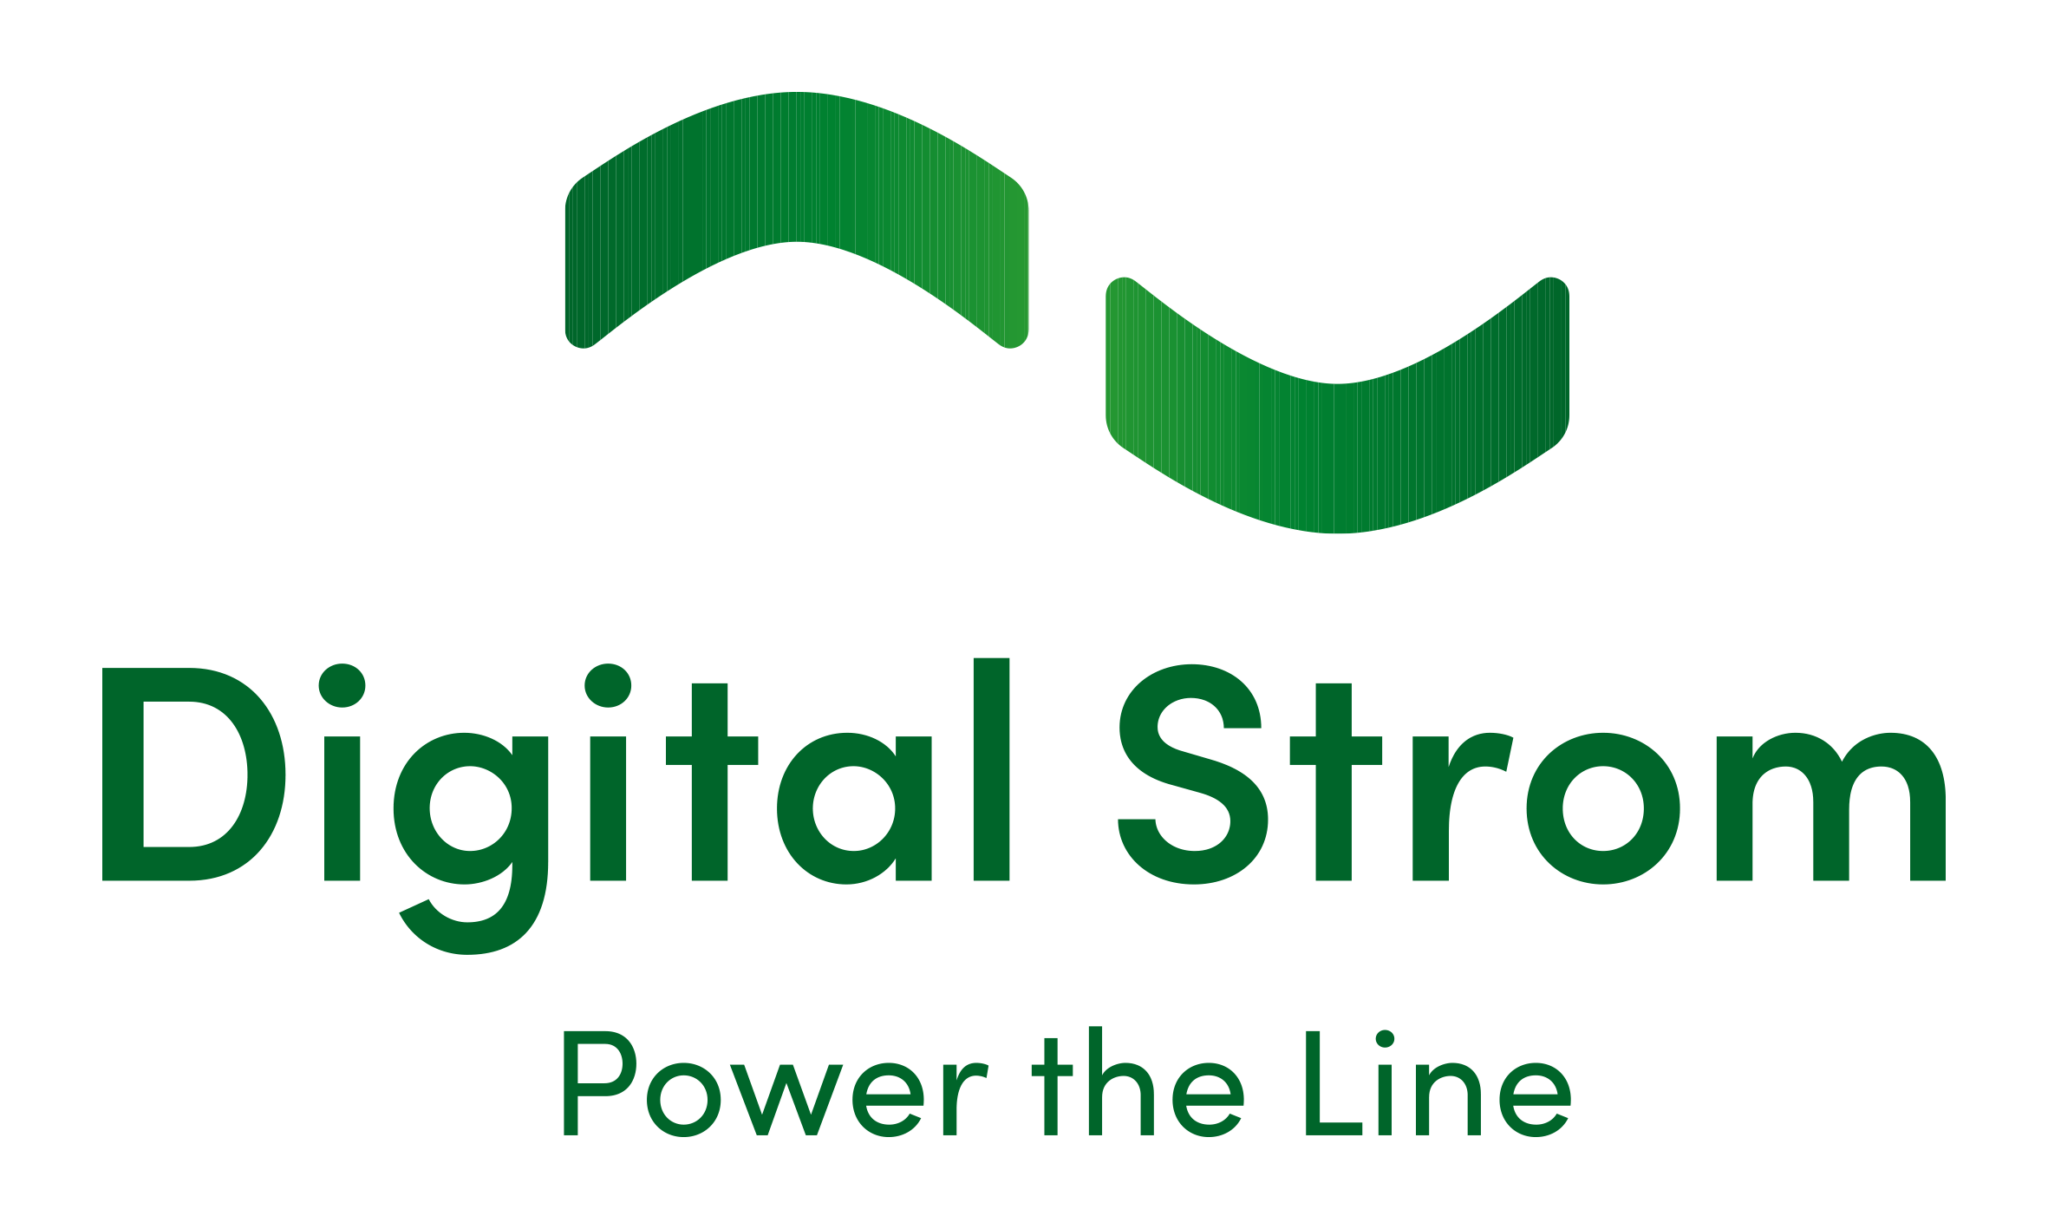 Digital Strom